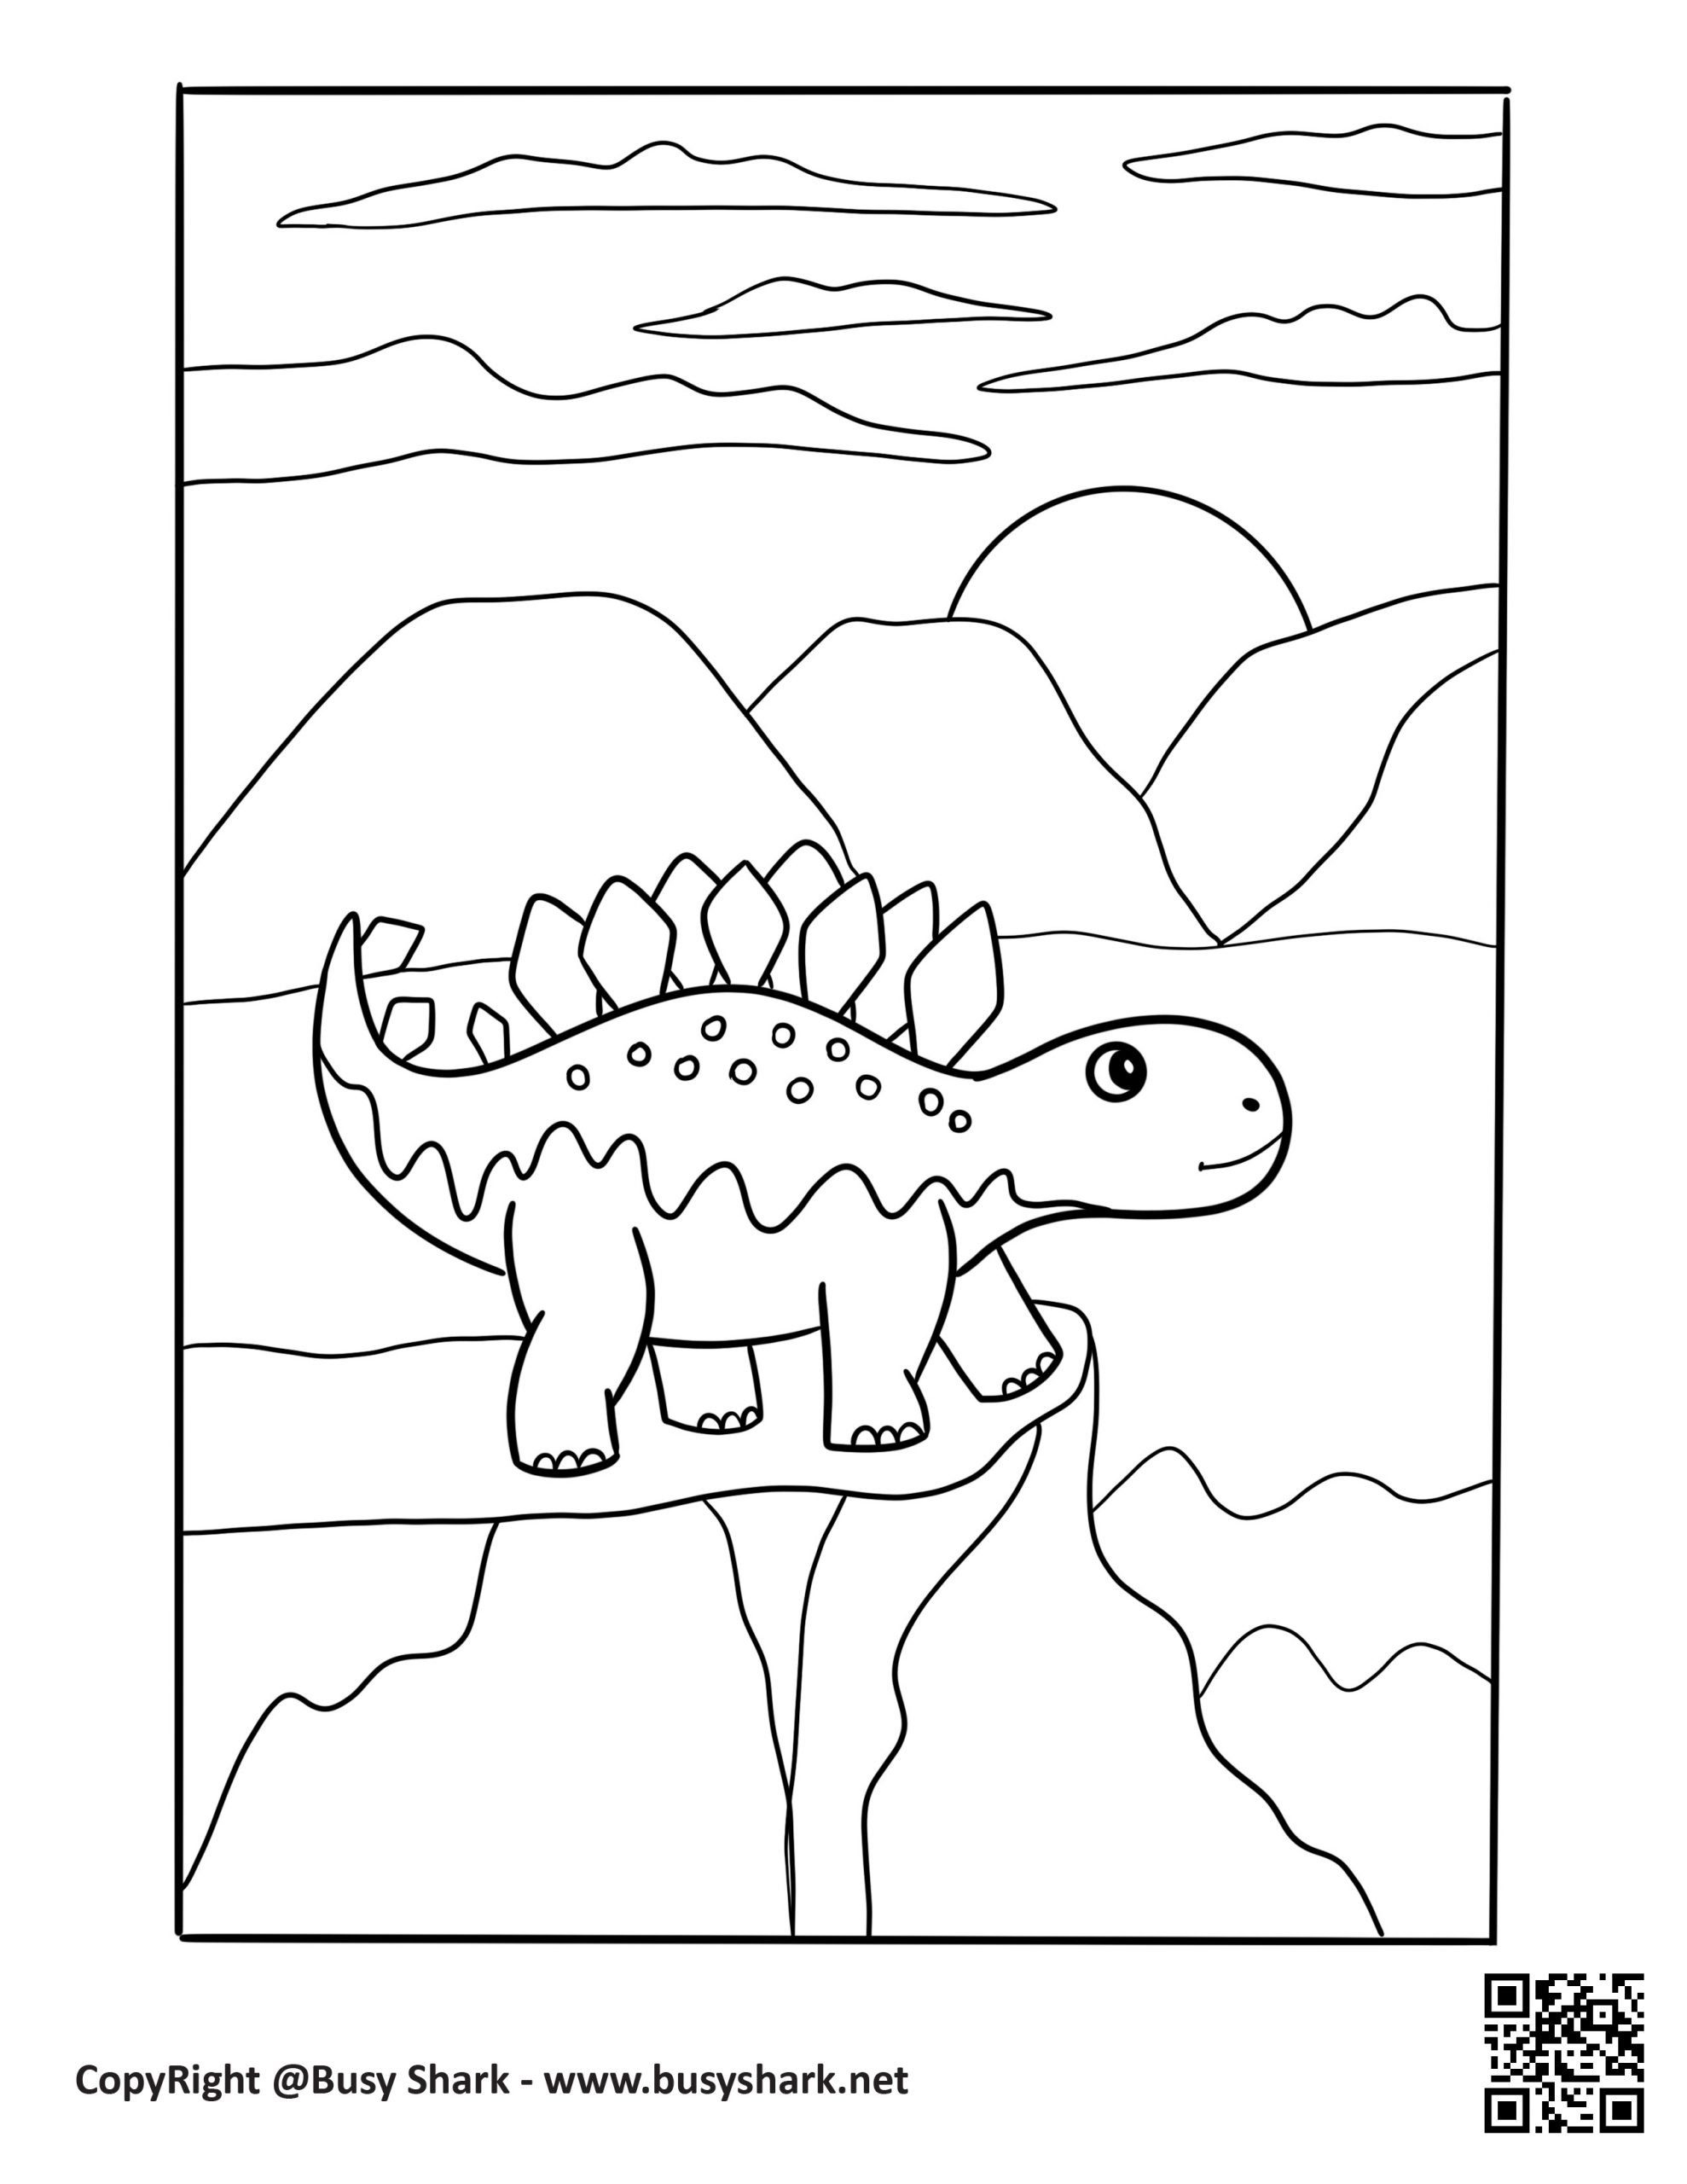 Stegosaurus coloring page free printable